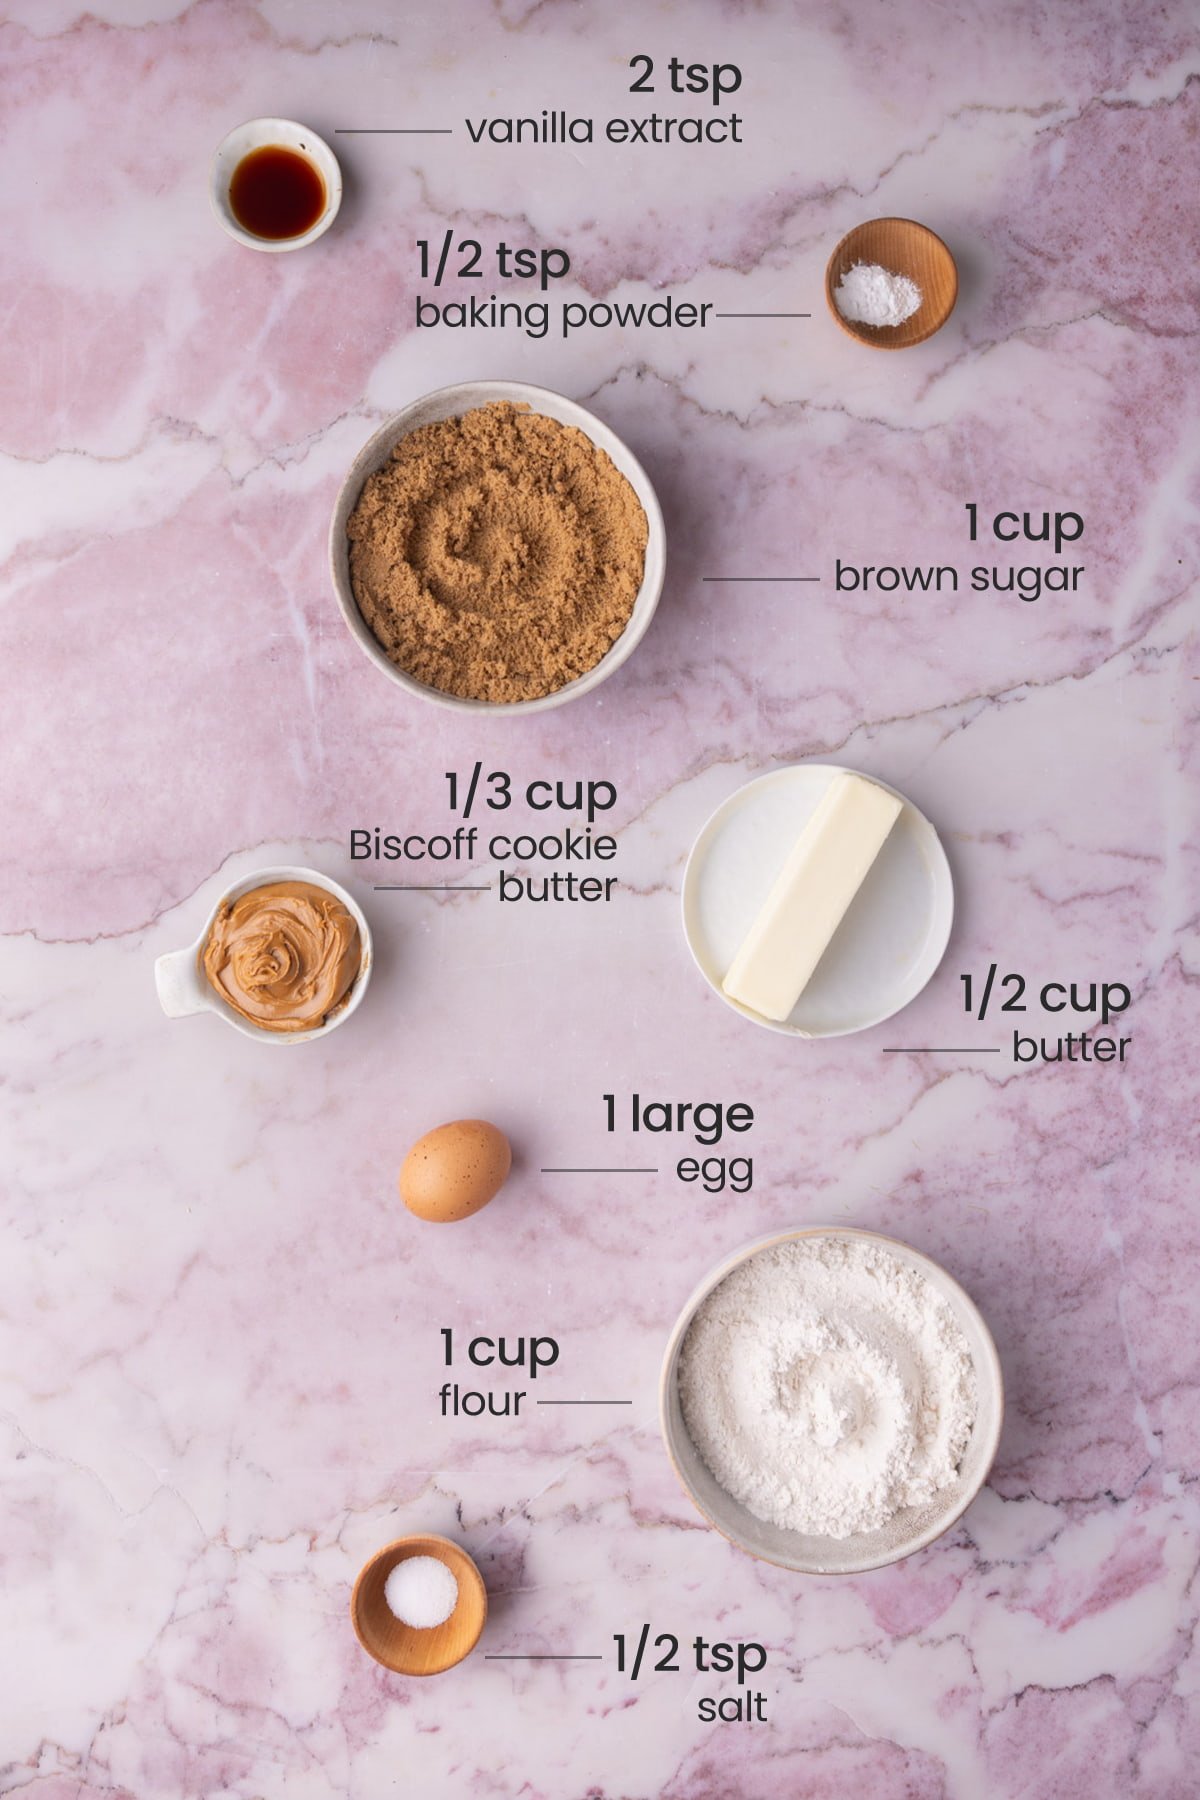 overhead view of all ingredients for Biscoff Blondies - vanilla extract, baking powder, brown sugar, Biscoff cookie butter, butter, egg, flour, salt